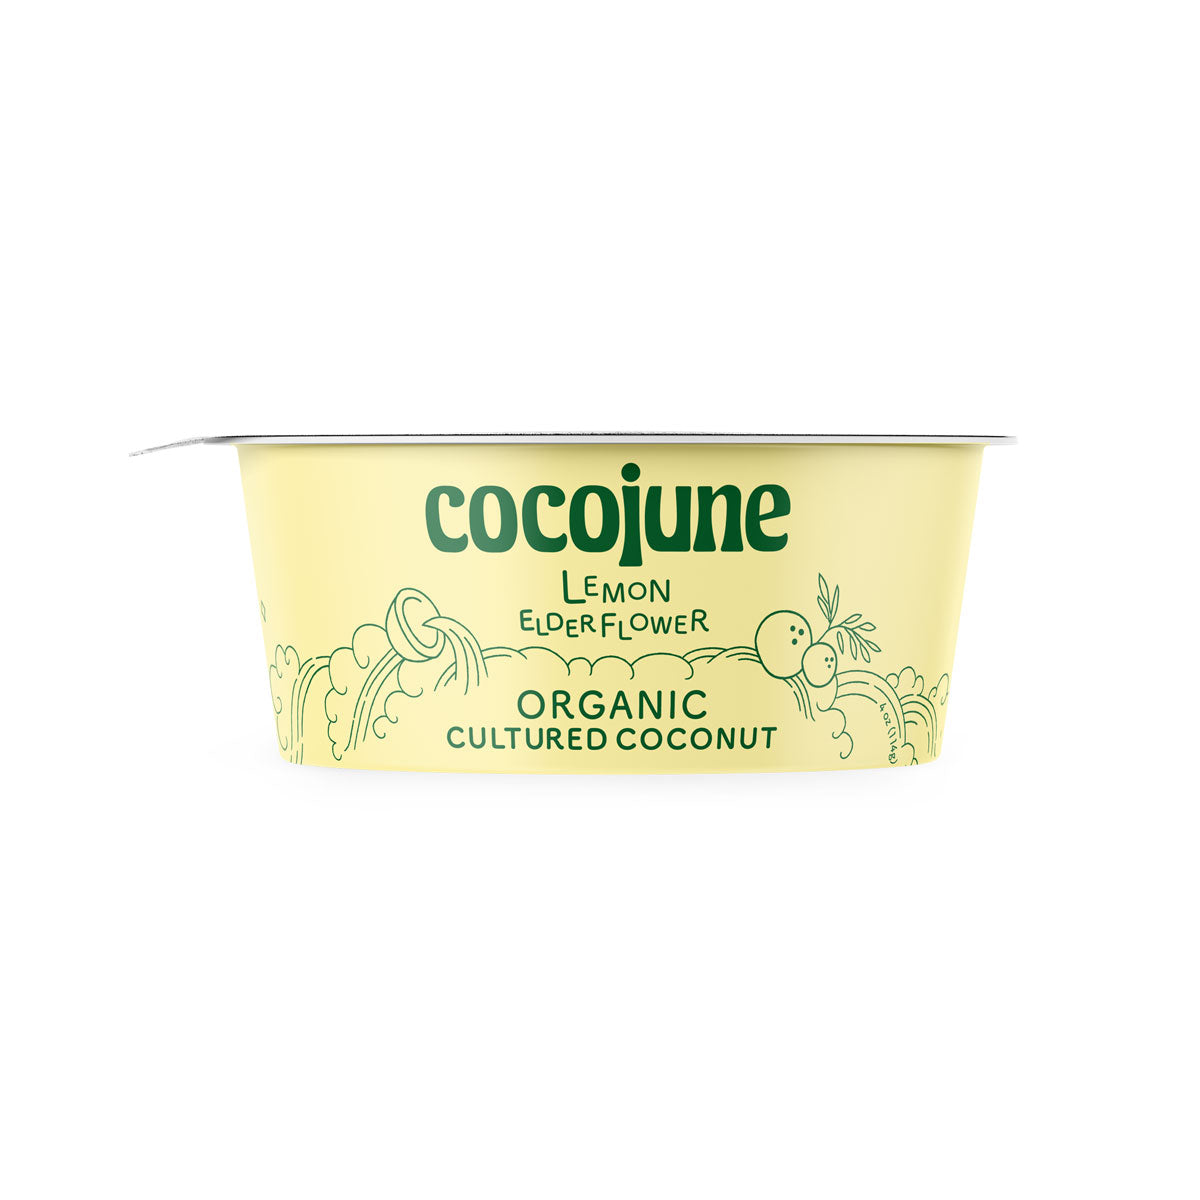 Cocojune Organic Vegan Lemon Elderflower Coconut Yogurt 4 OZ